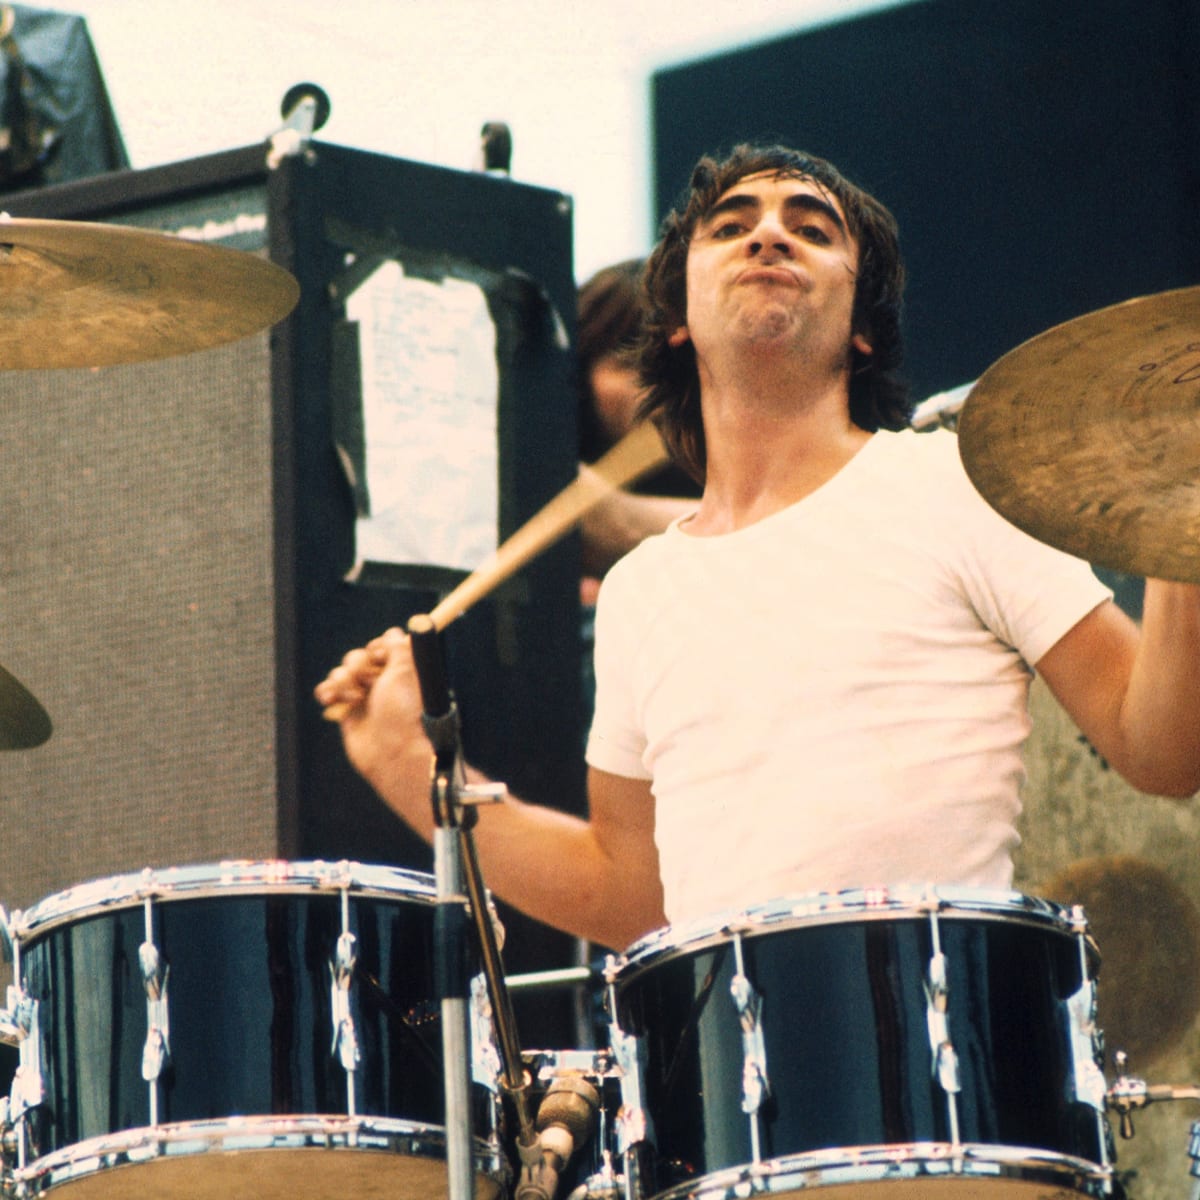 Vintage Star Drums (1965 to 1974) — Not So Modern Drummer